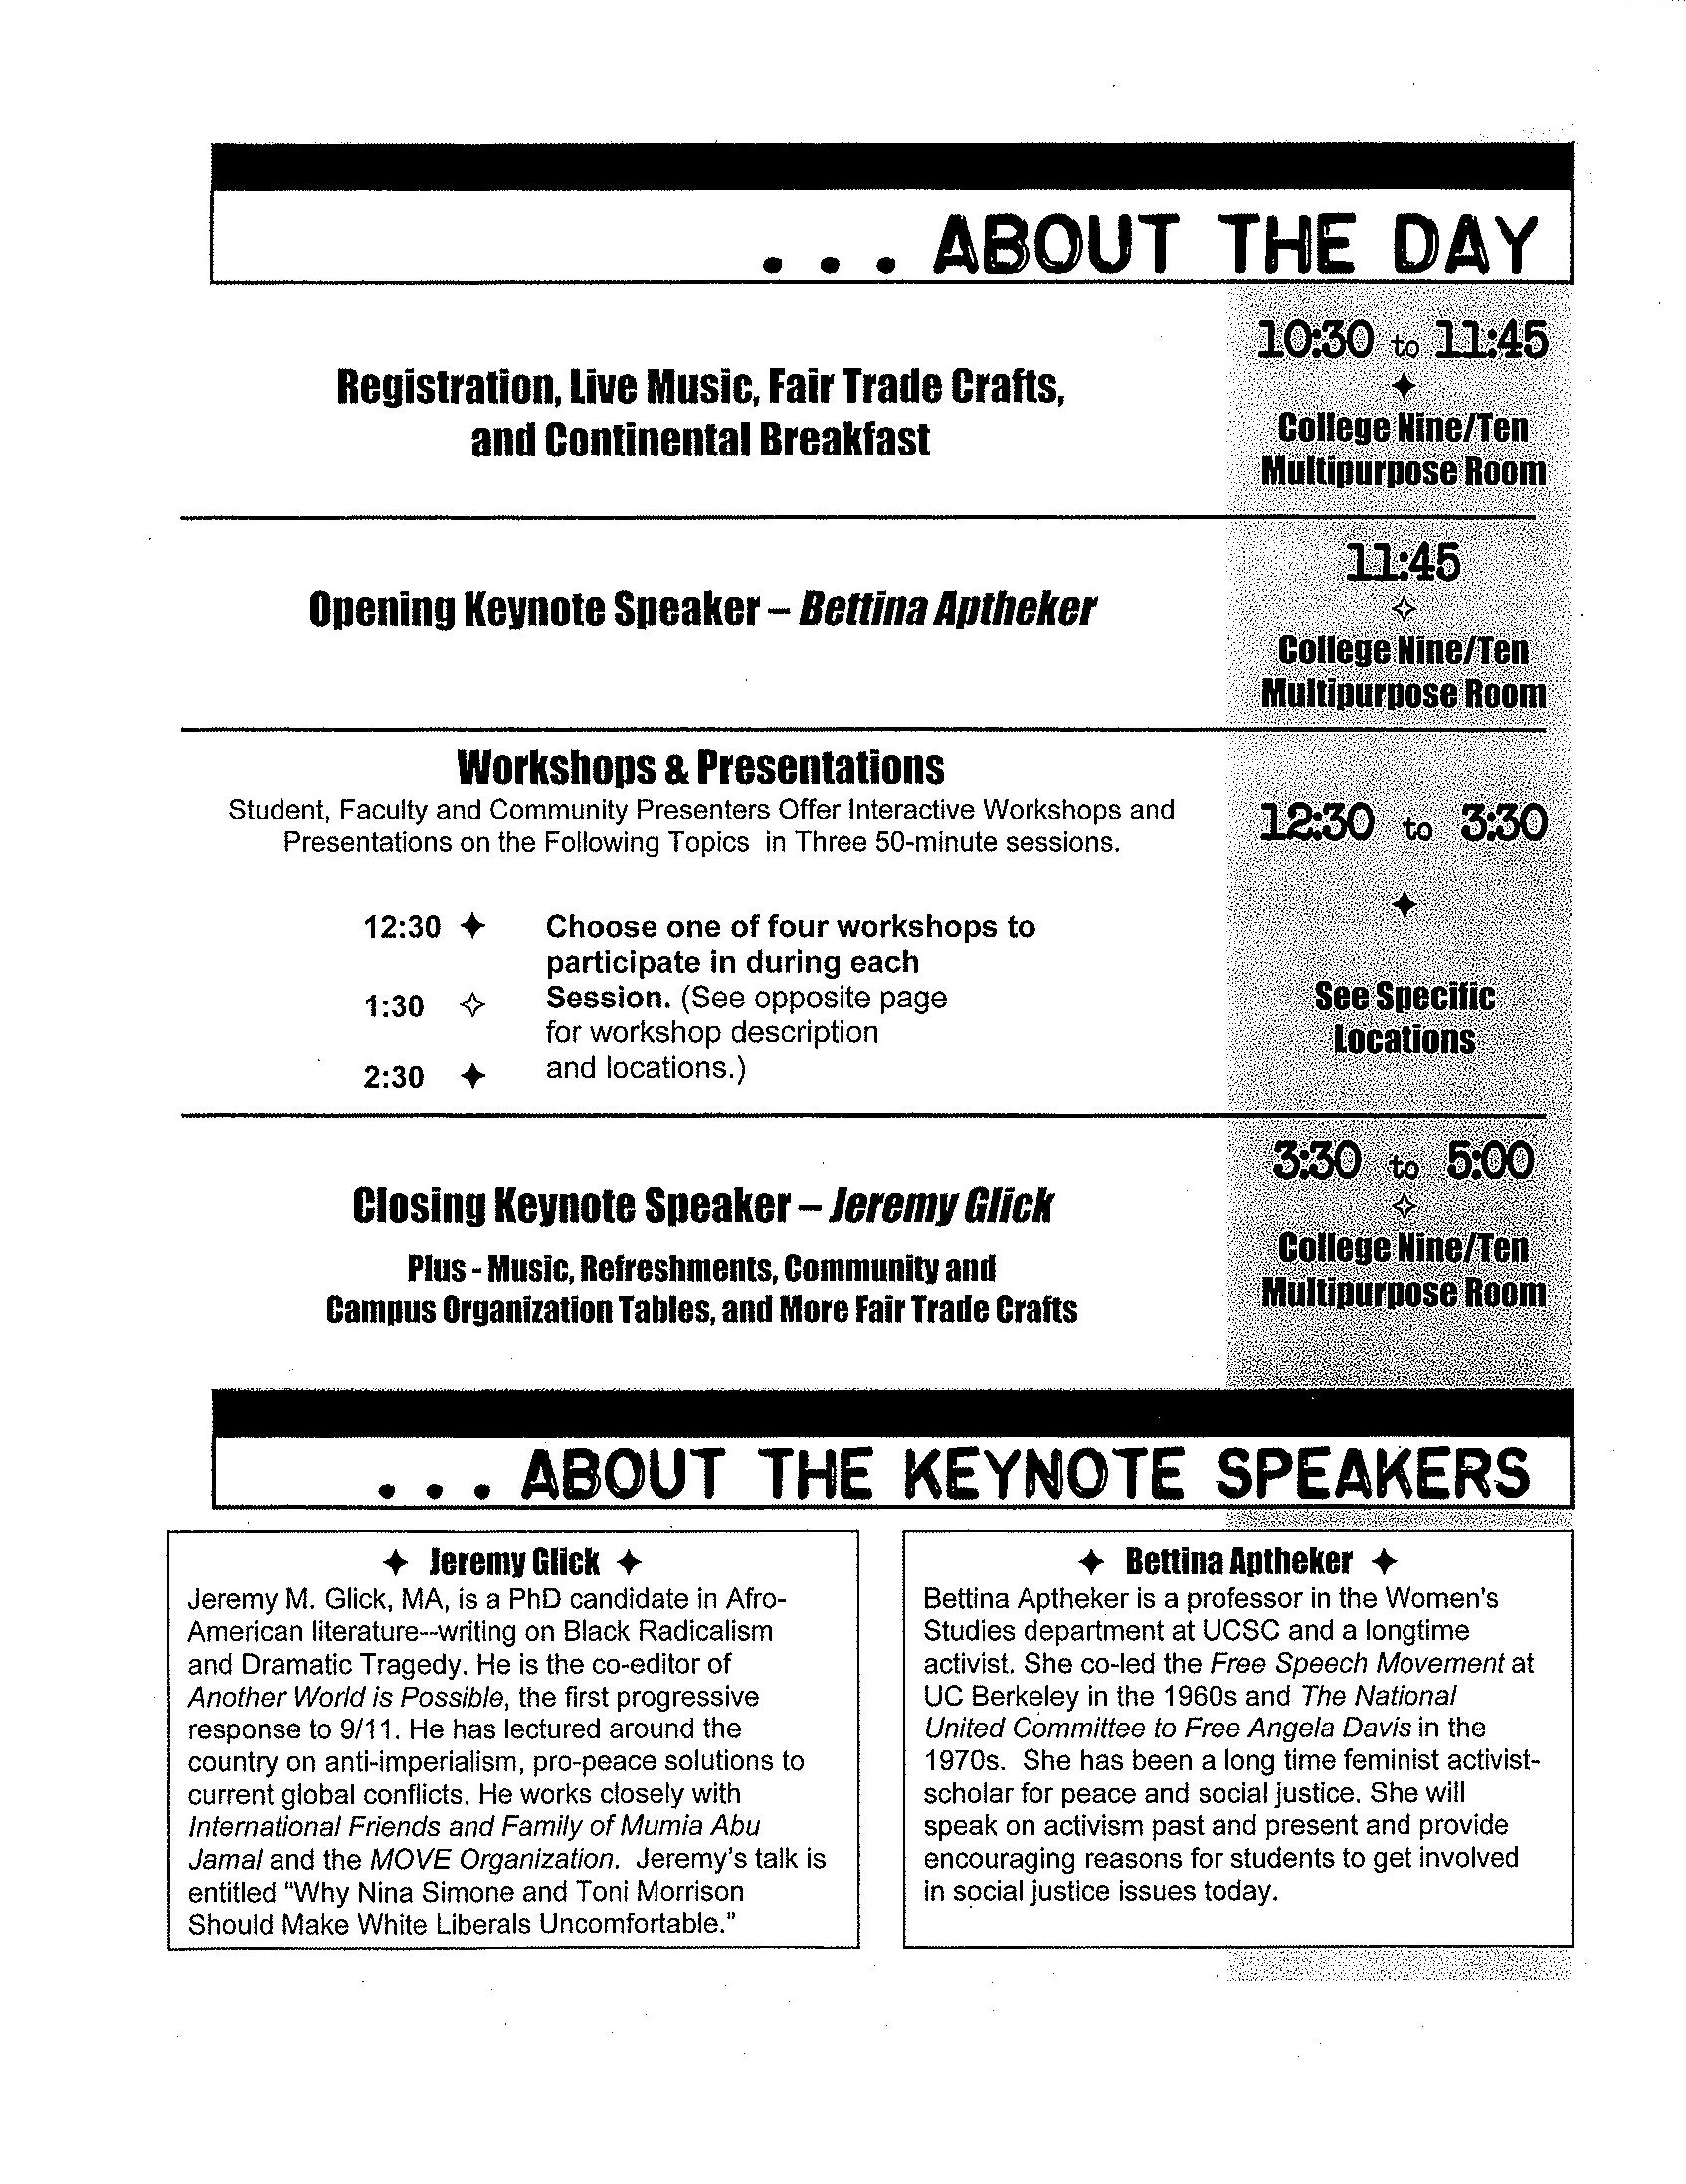 PAC Program 2003